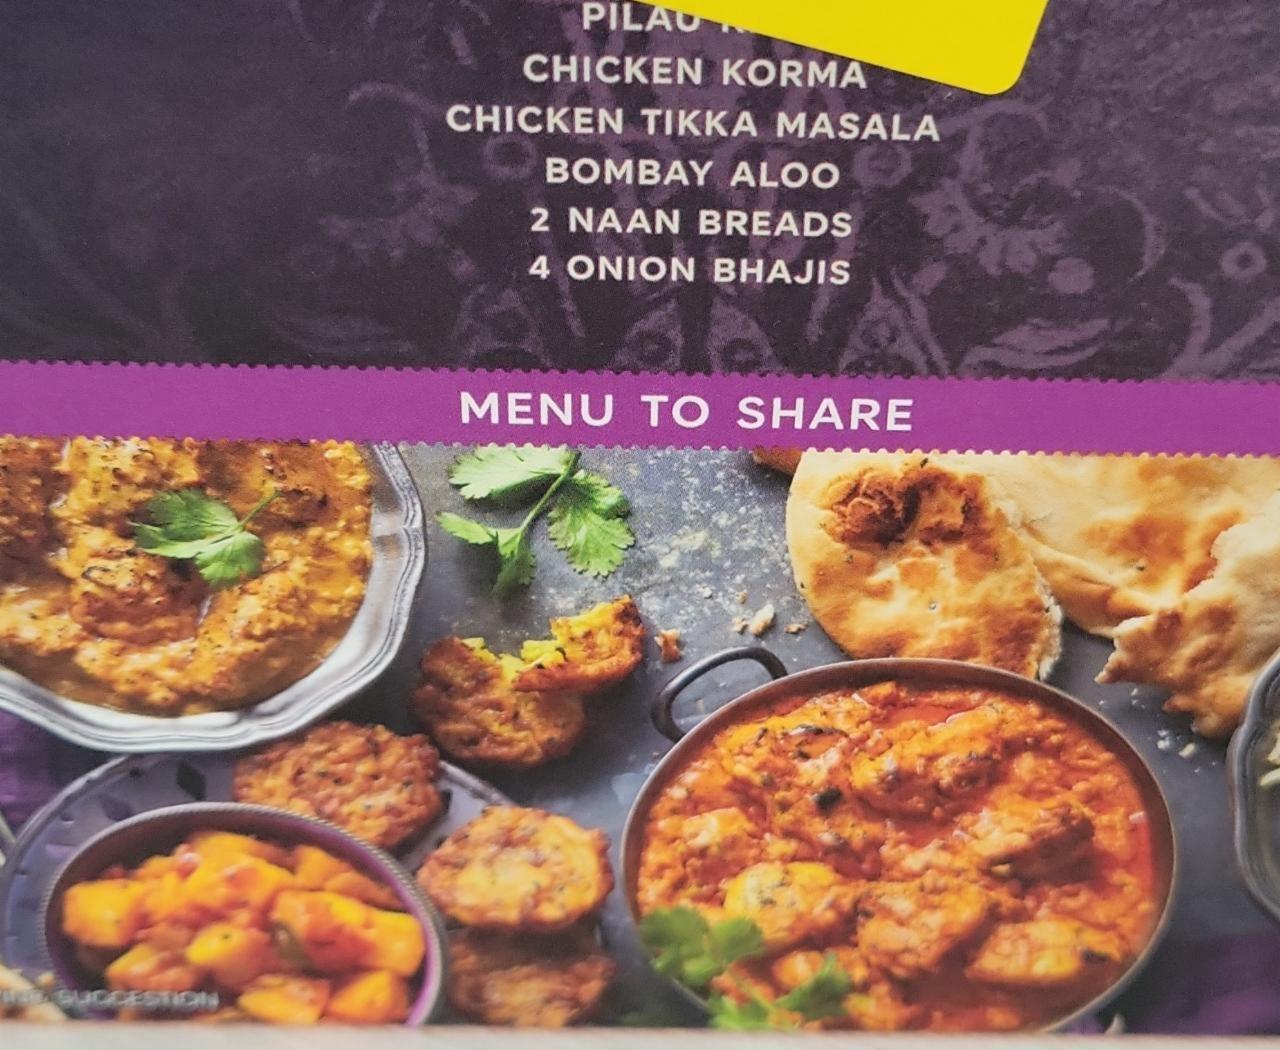 Fotografie - Chicken korma menu to share M&S Food